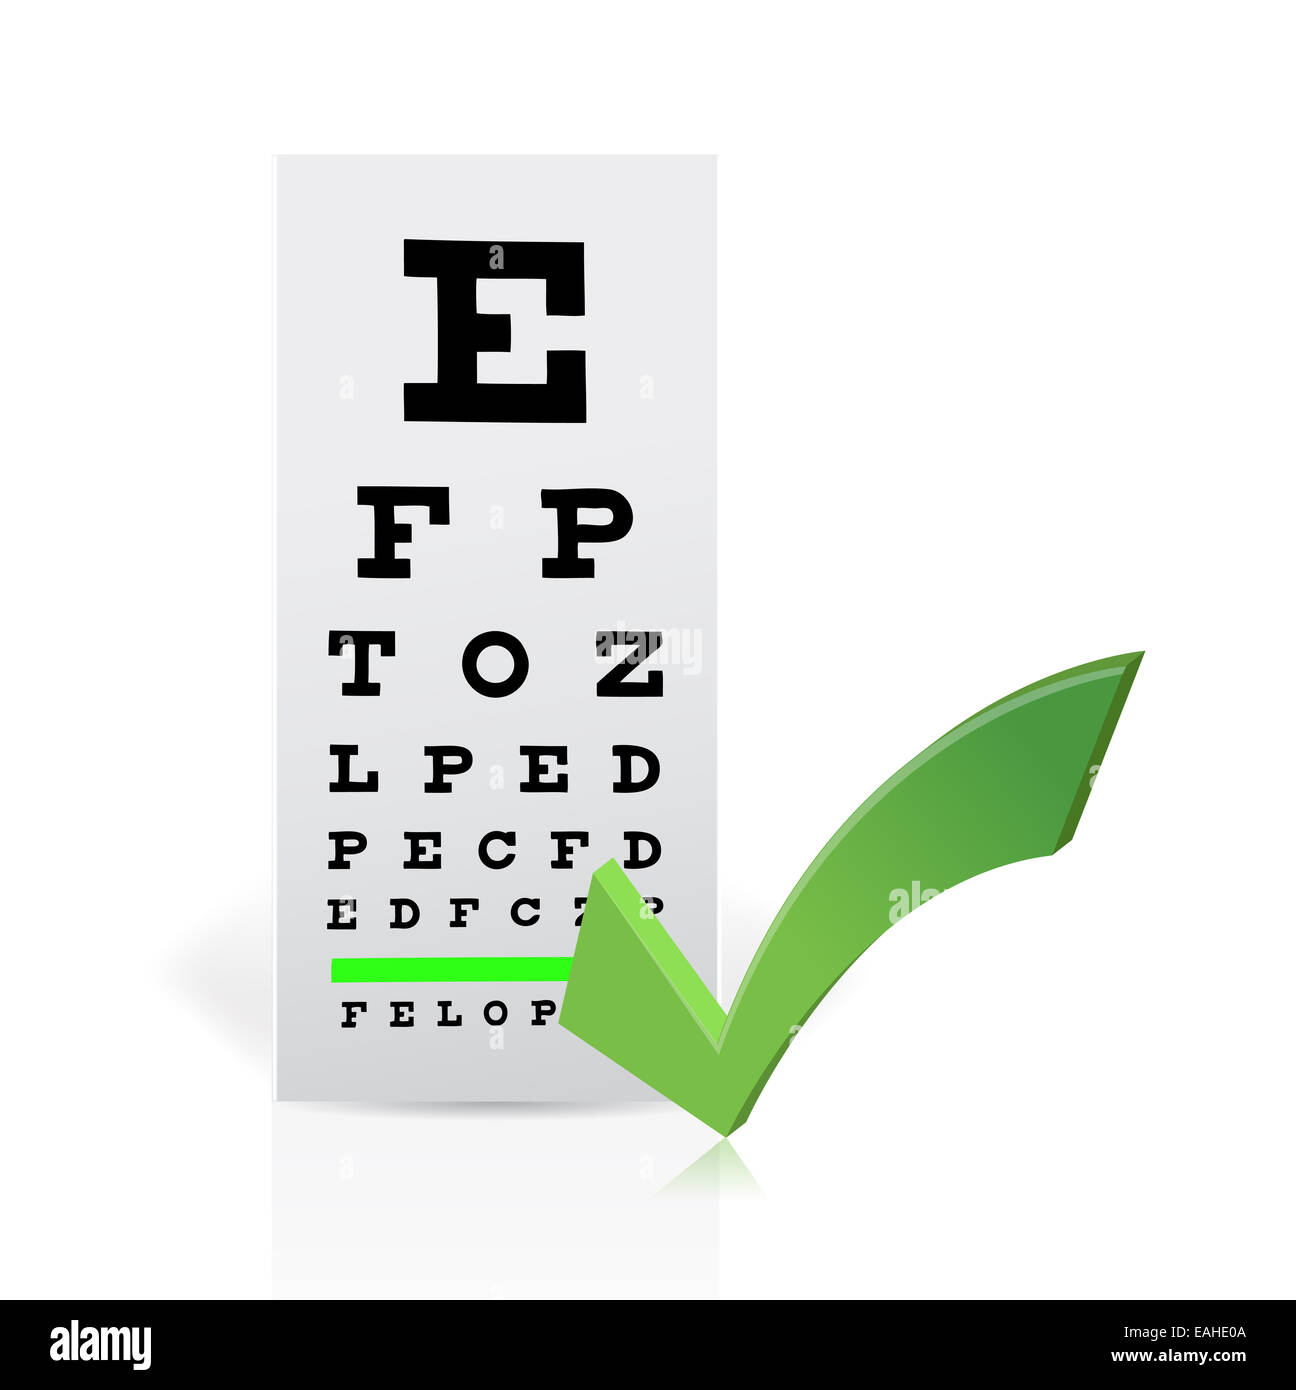 https://c8.alamy.com/comp/EAHE0A/medical-eye-chart-with-a-checkmark-good-vision-EAHE0A.jpg